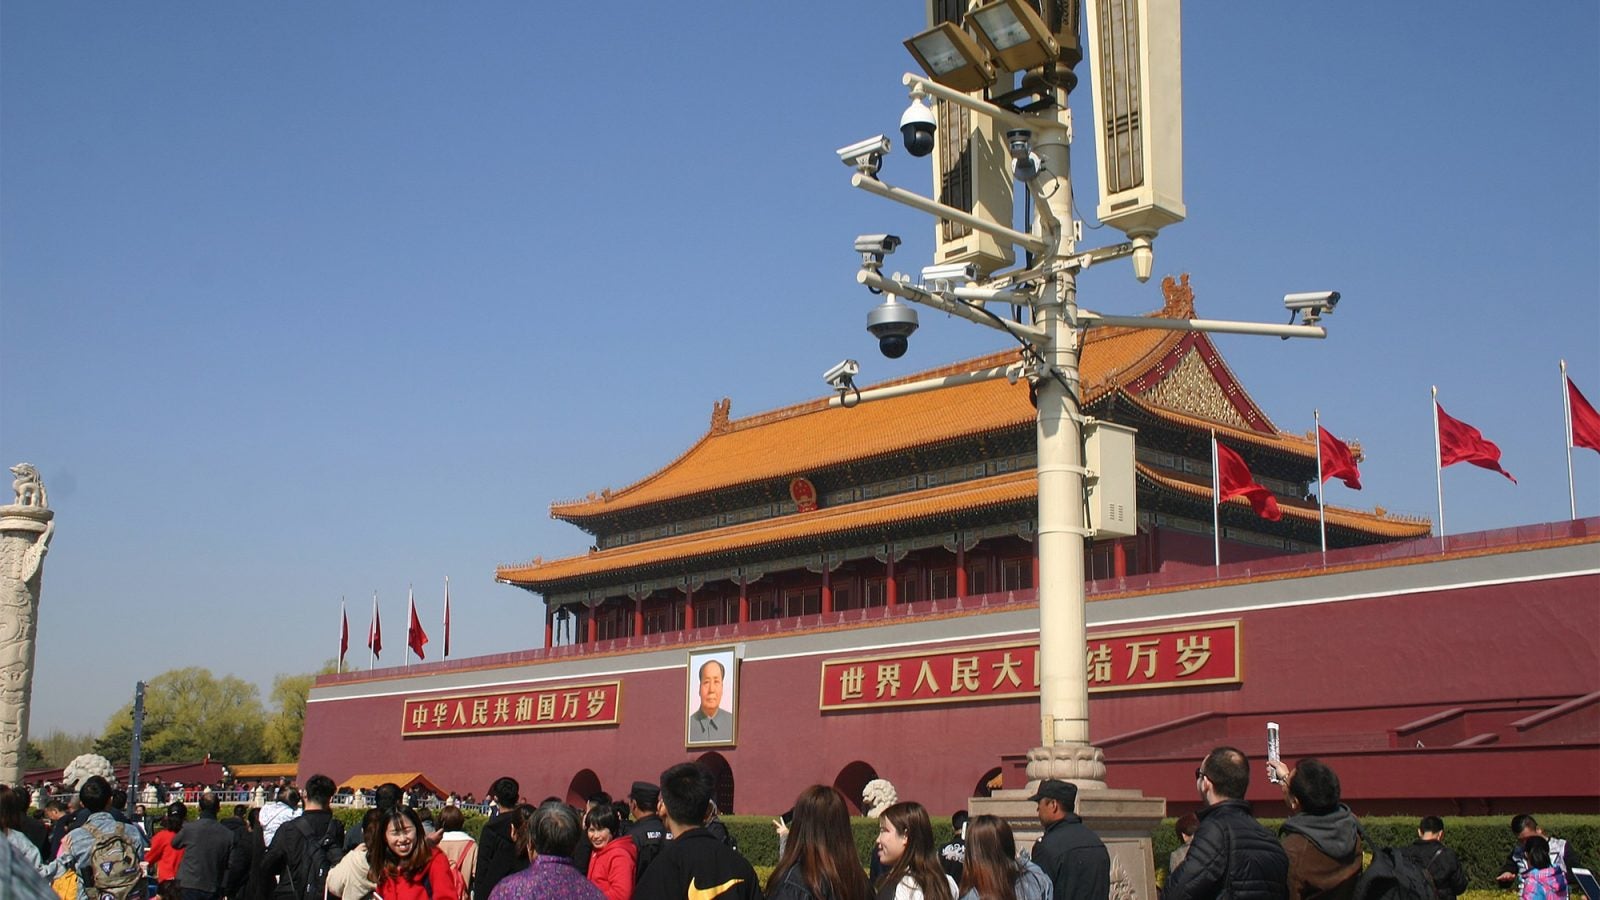 Tiananmen Gate with surveillance cameras.